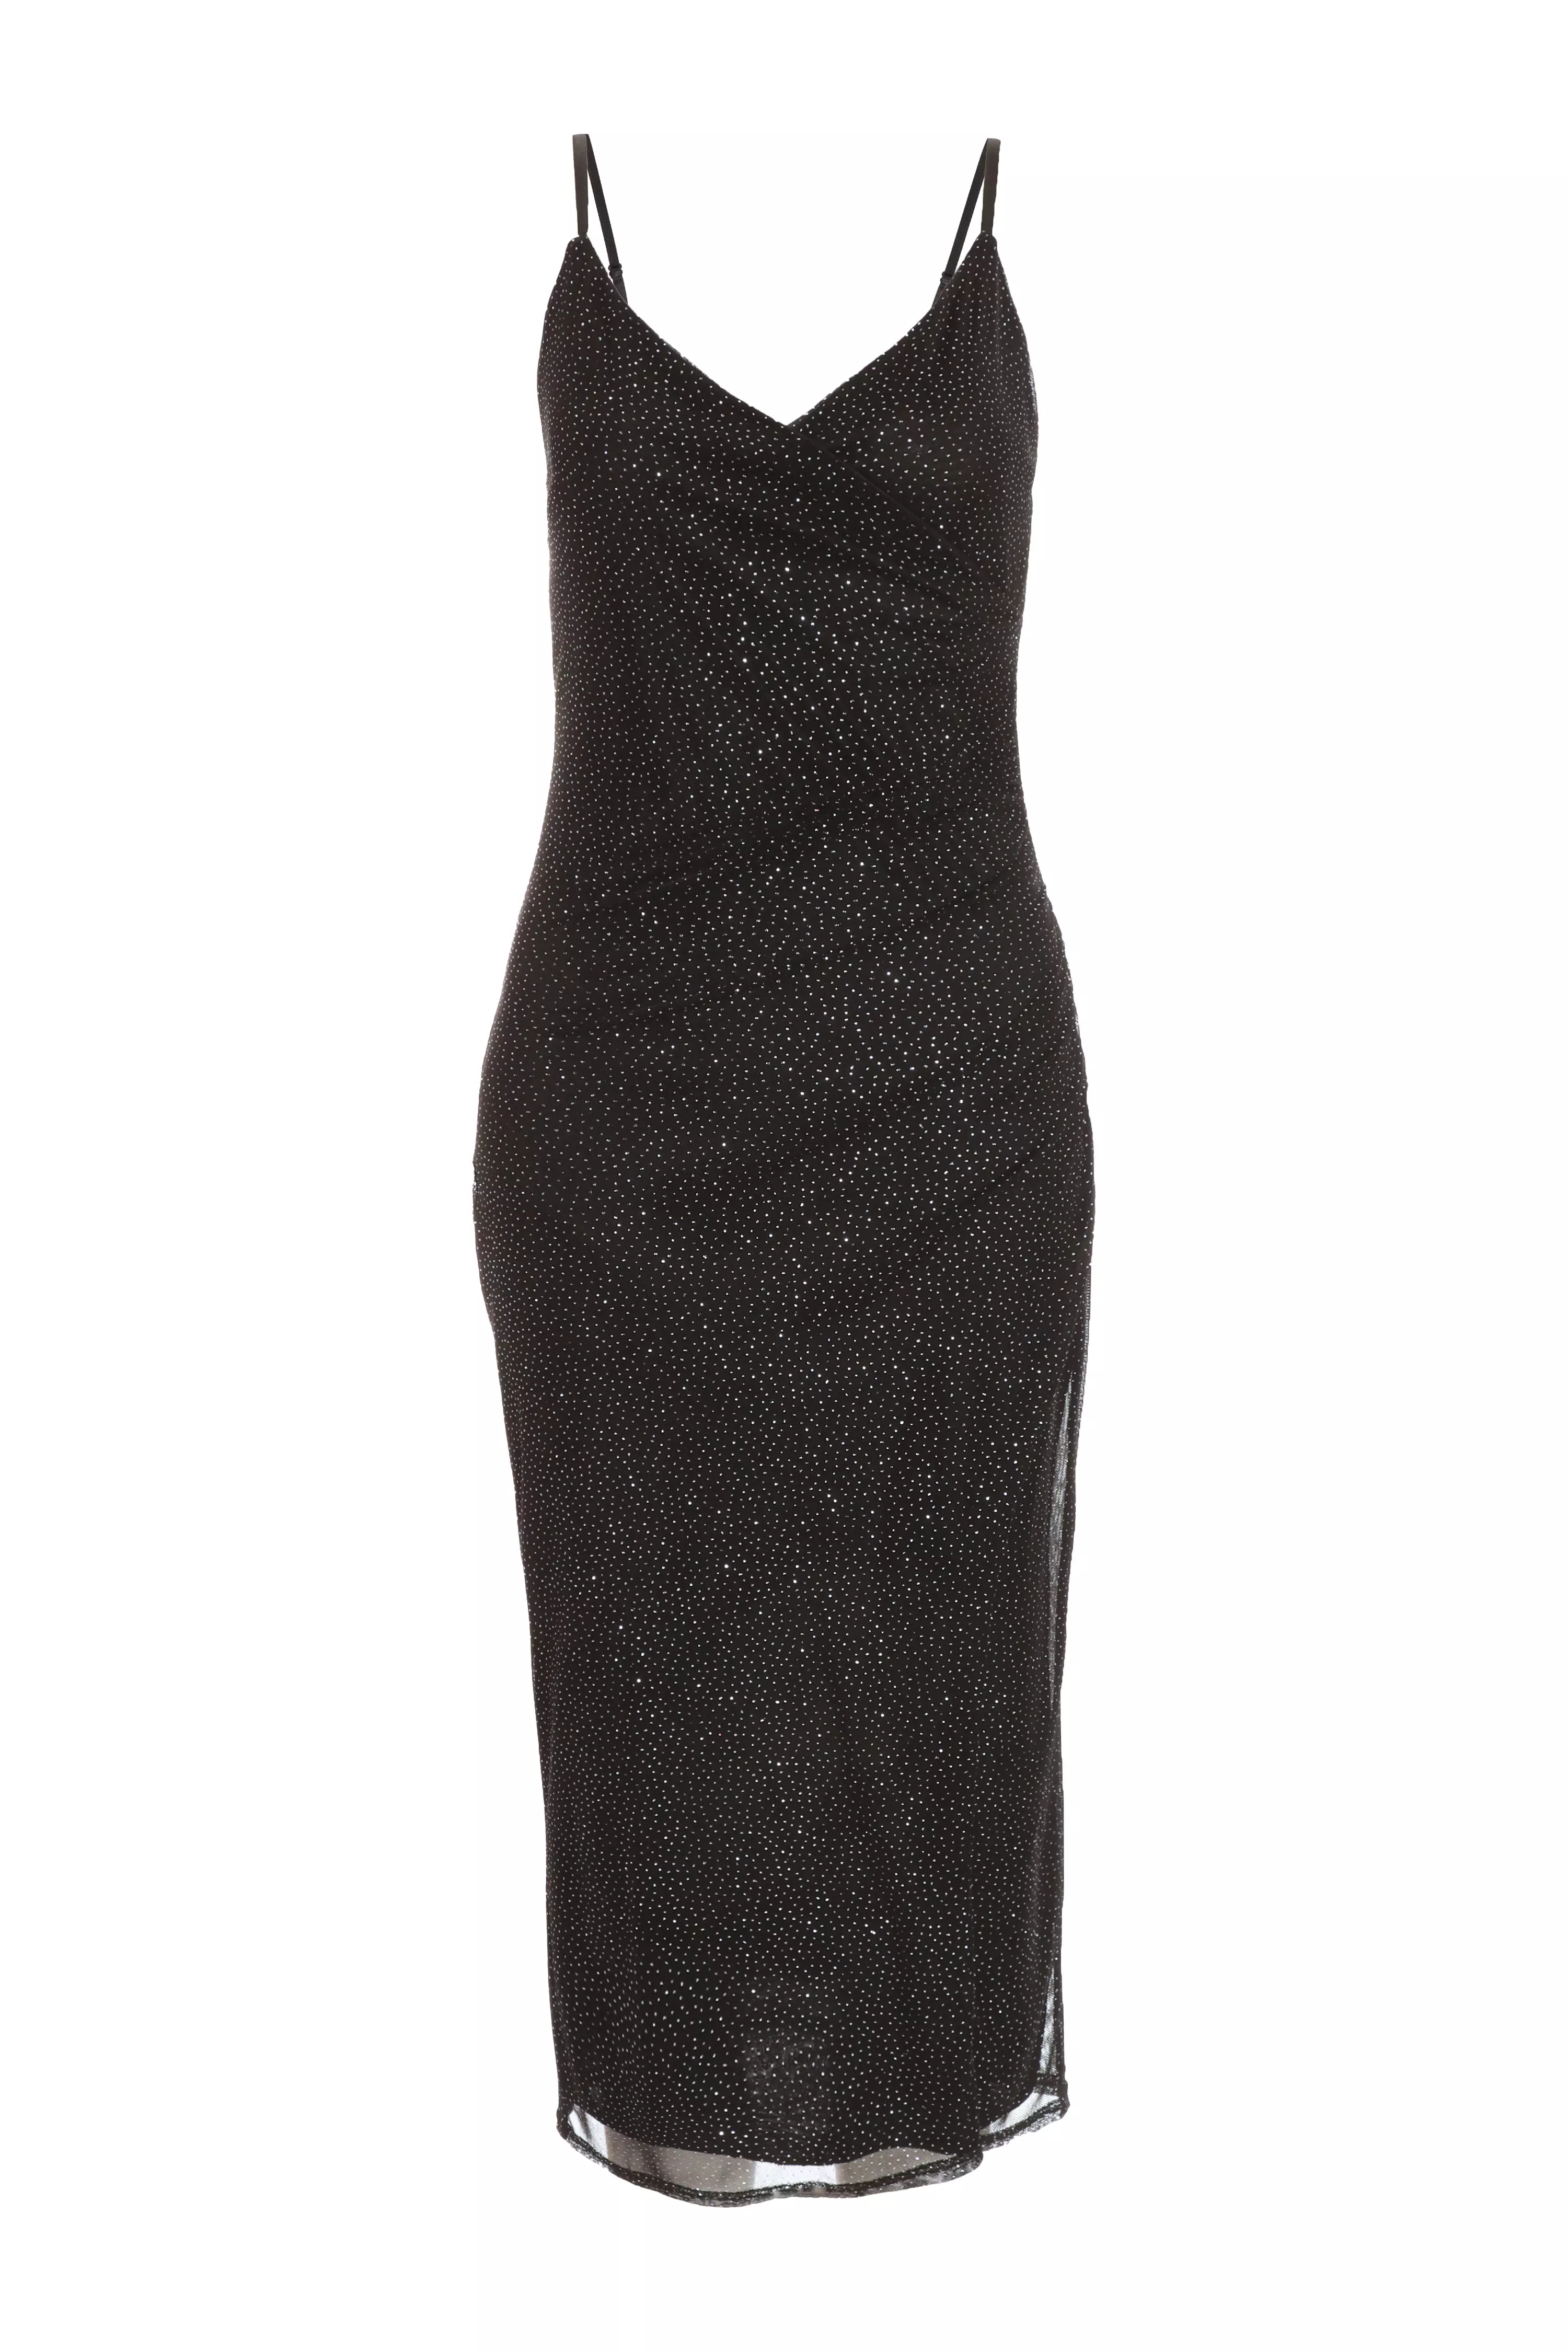 Petite Black Glitter Wrap Midi Dress - QUIZ Clothing